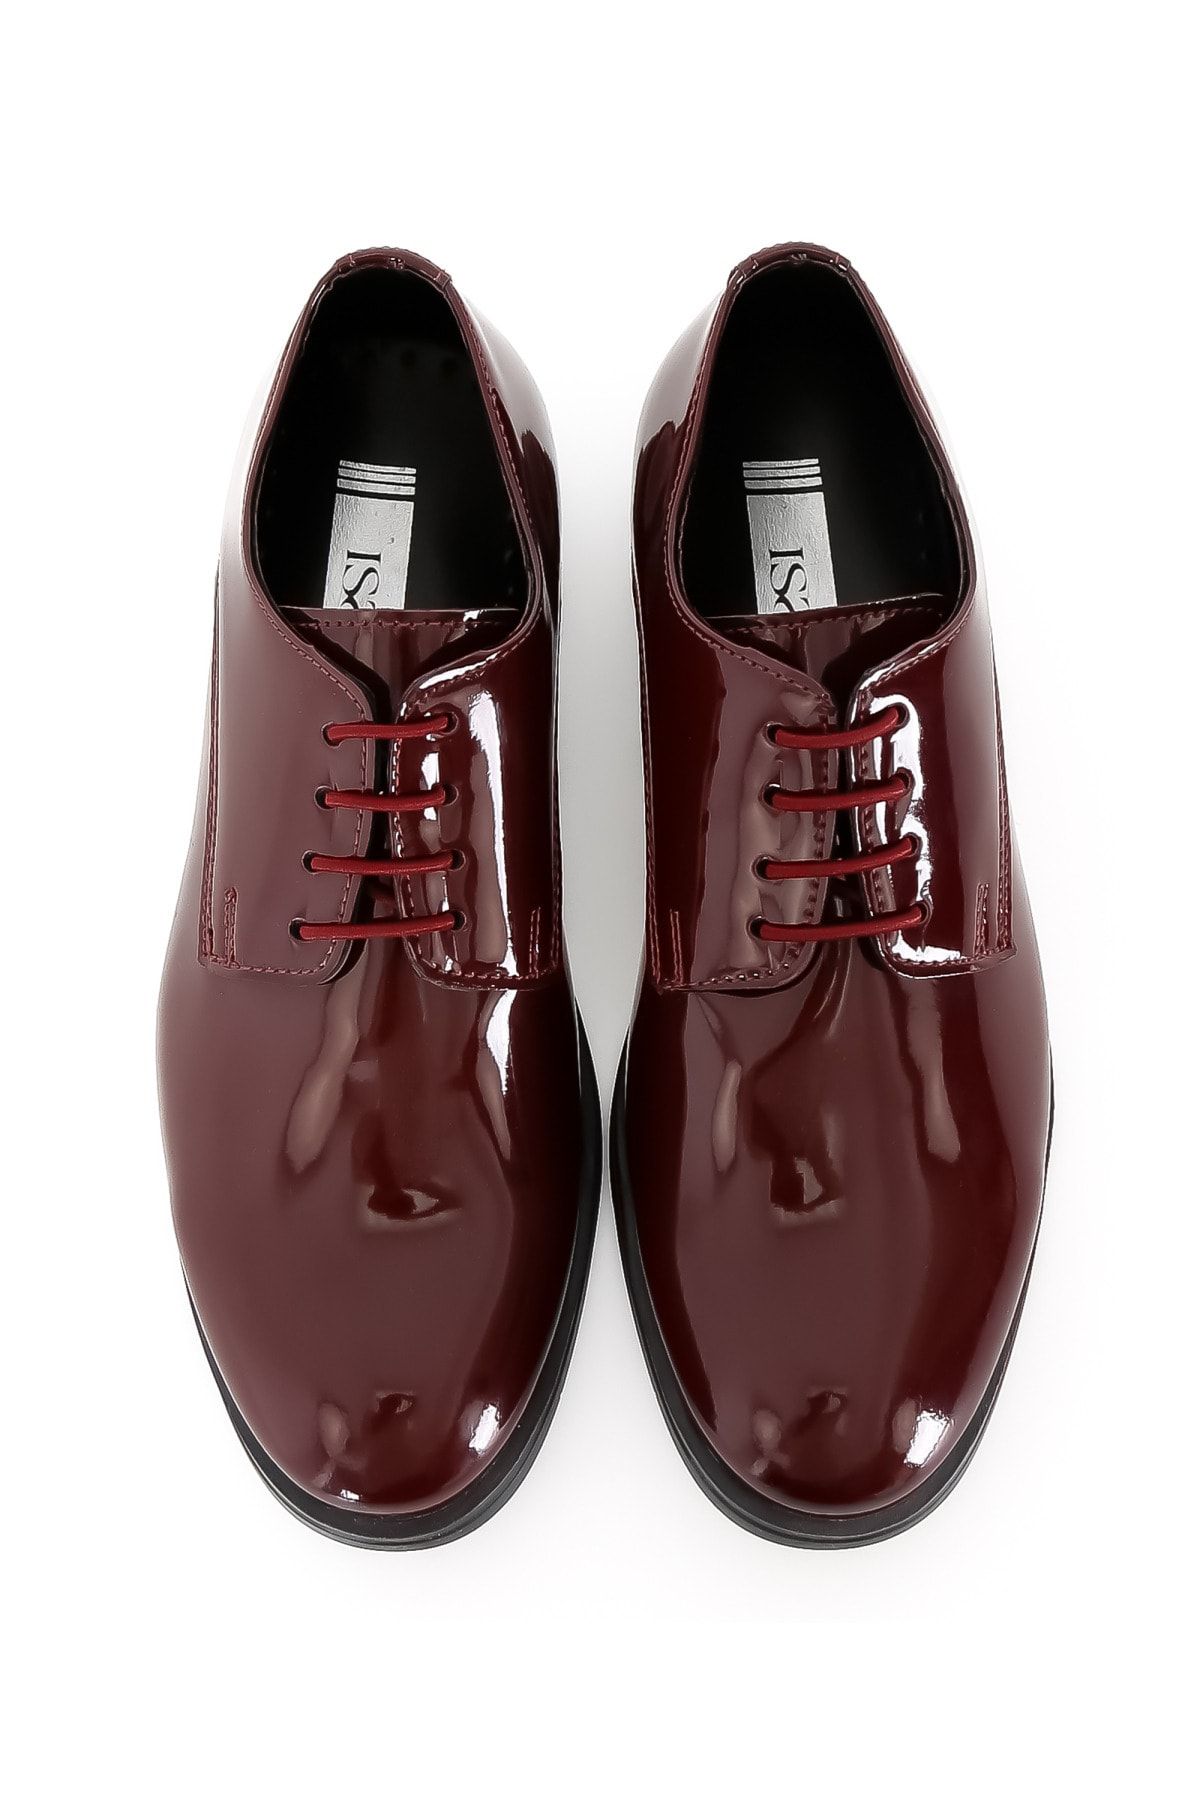 Burgundy Patent Leather Lace-up Shoes 36 Numara